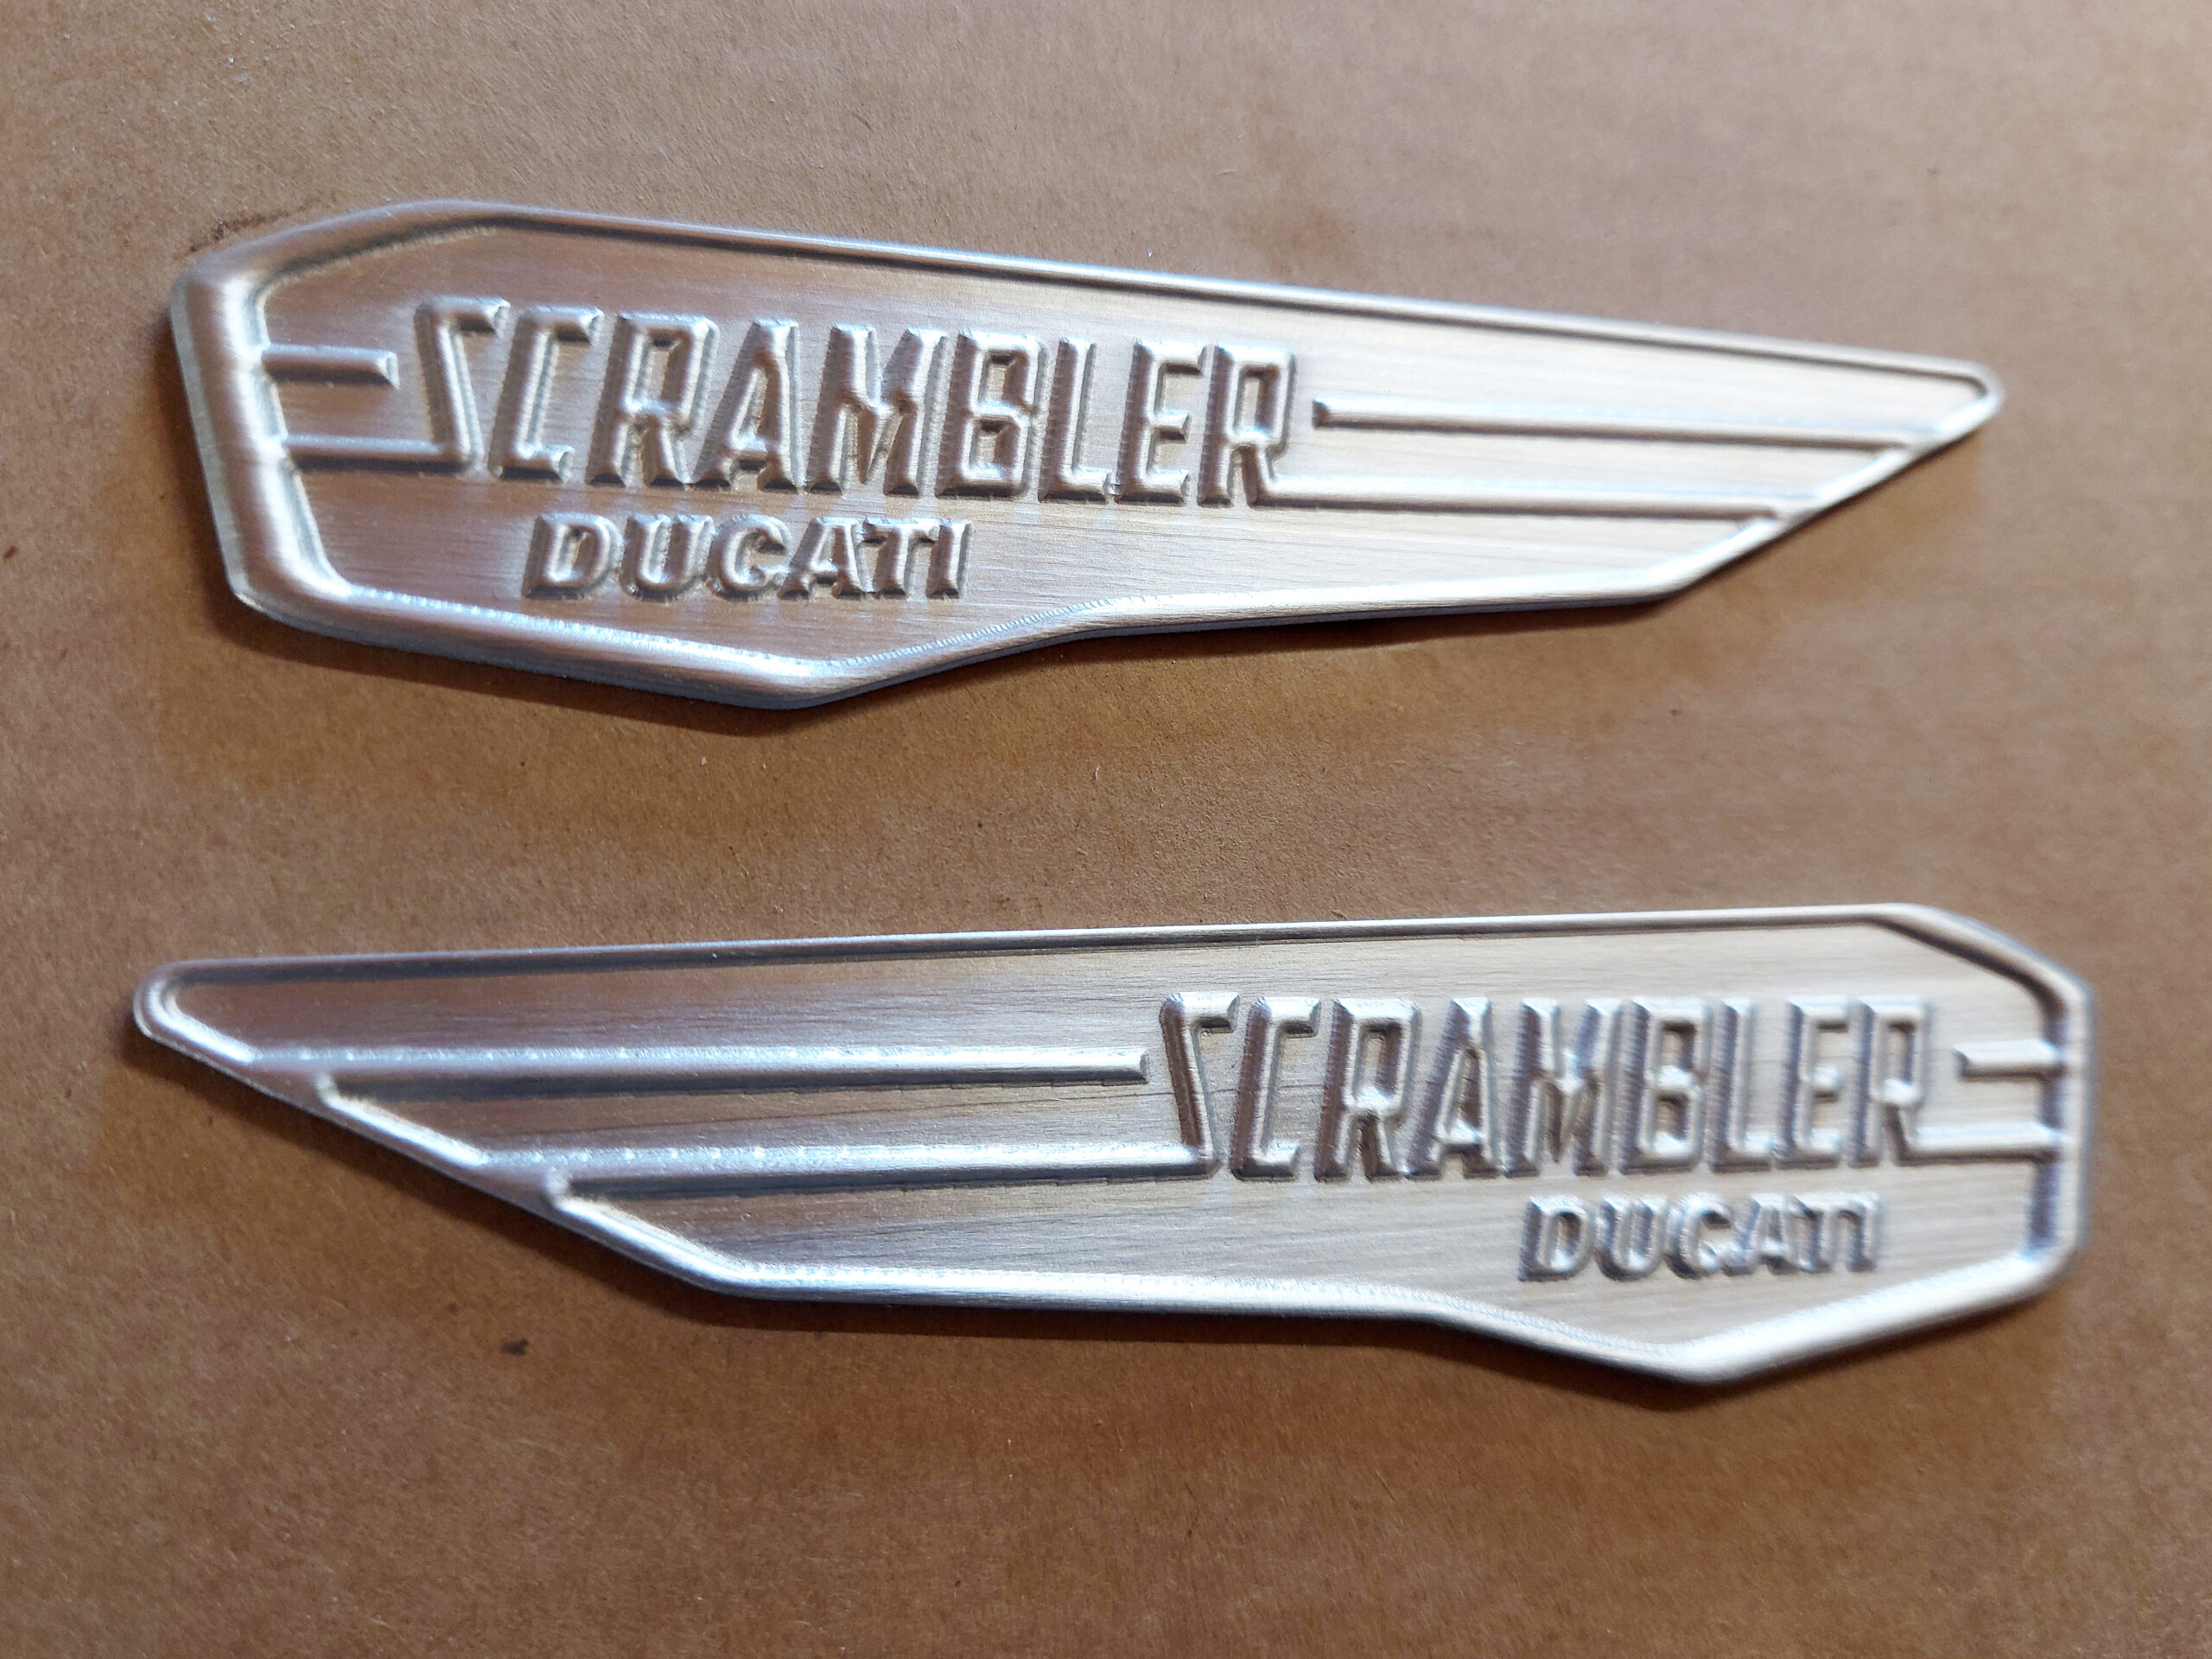 Logotipo de Ducati Scrambler